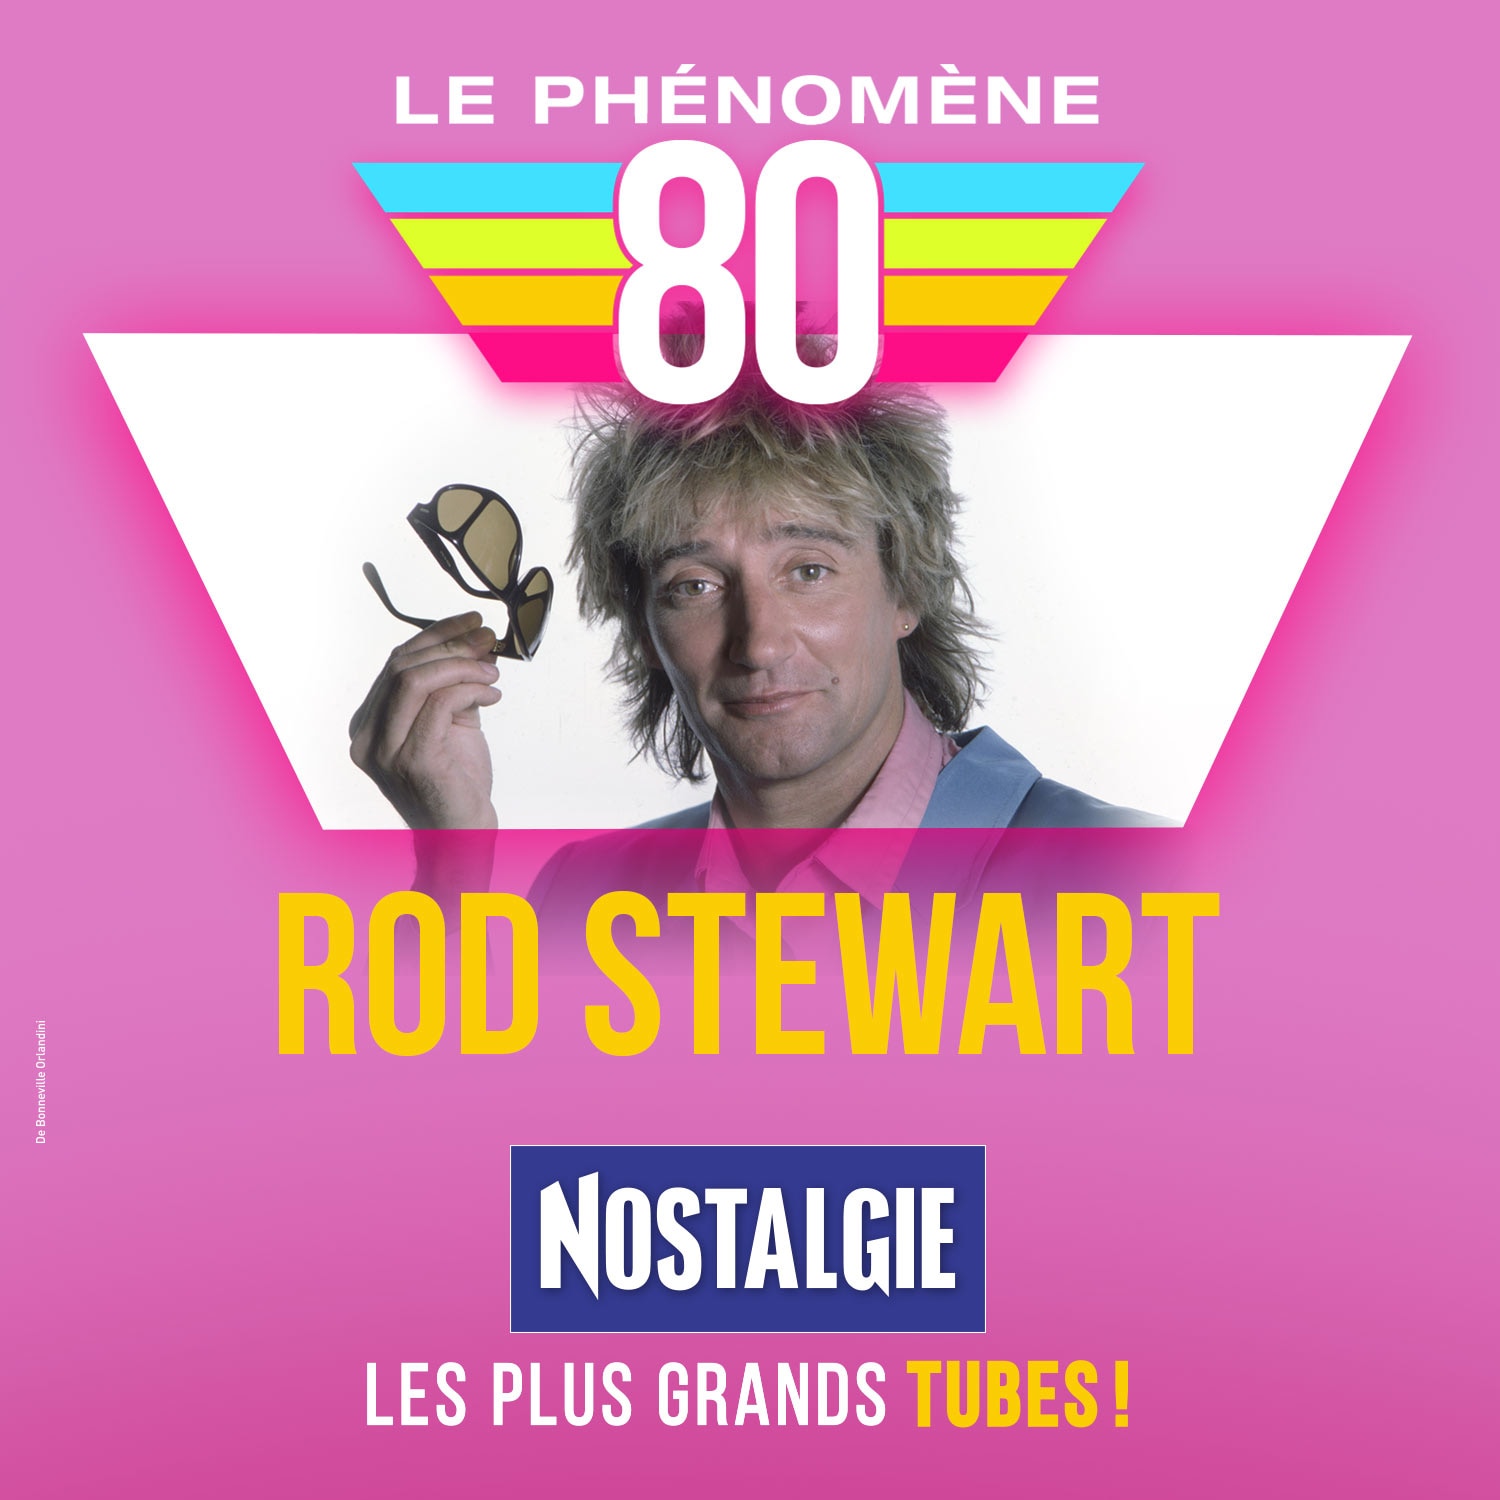 Le phénomène 80... Rod Stewart